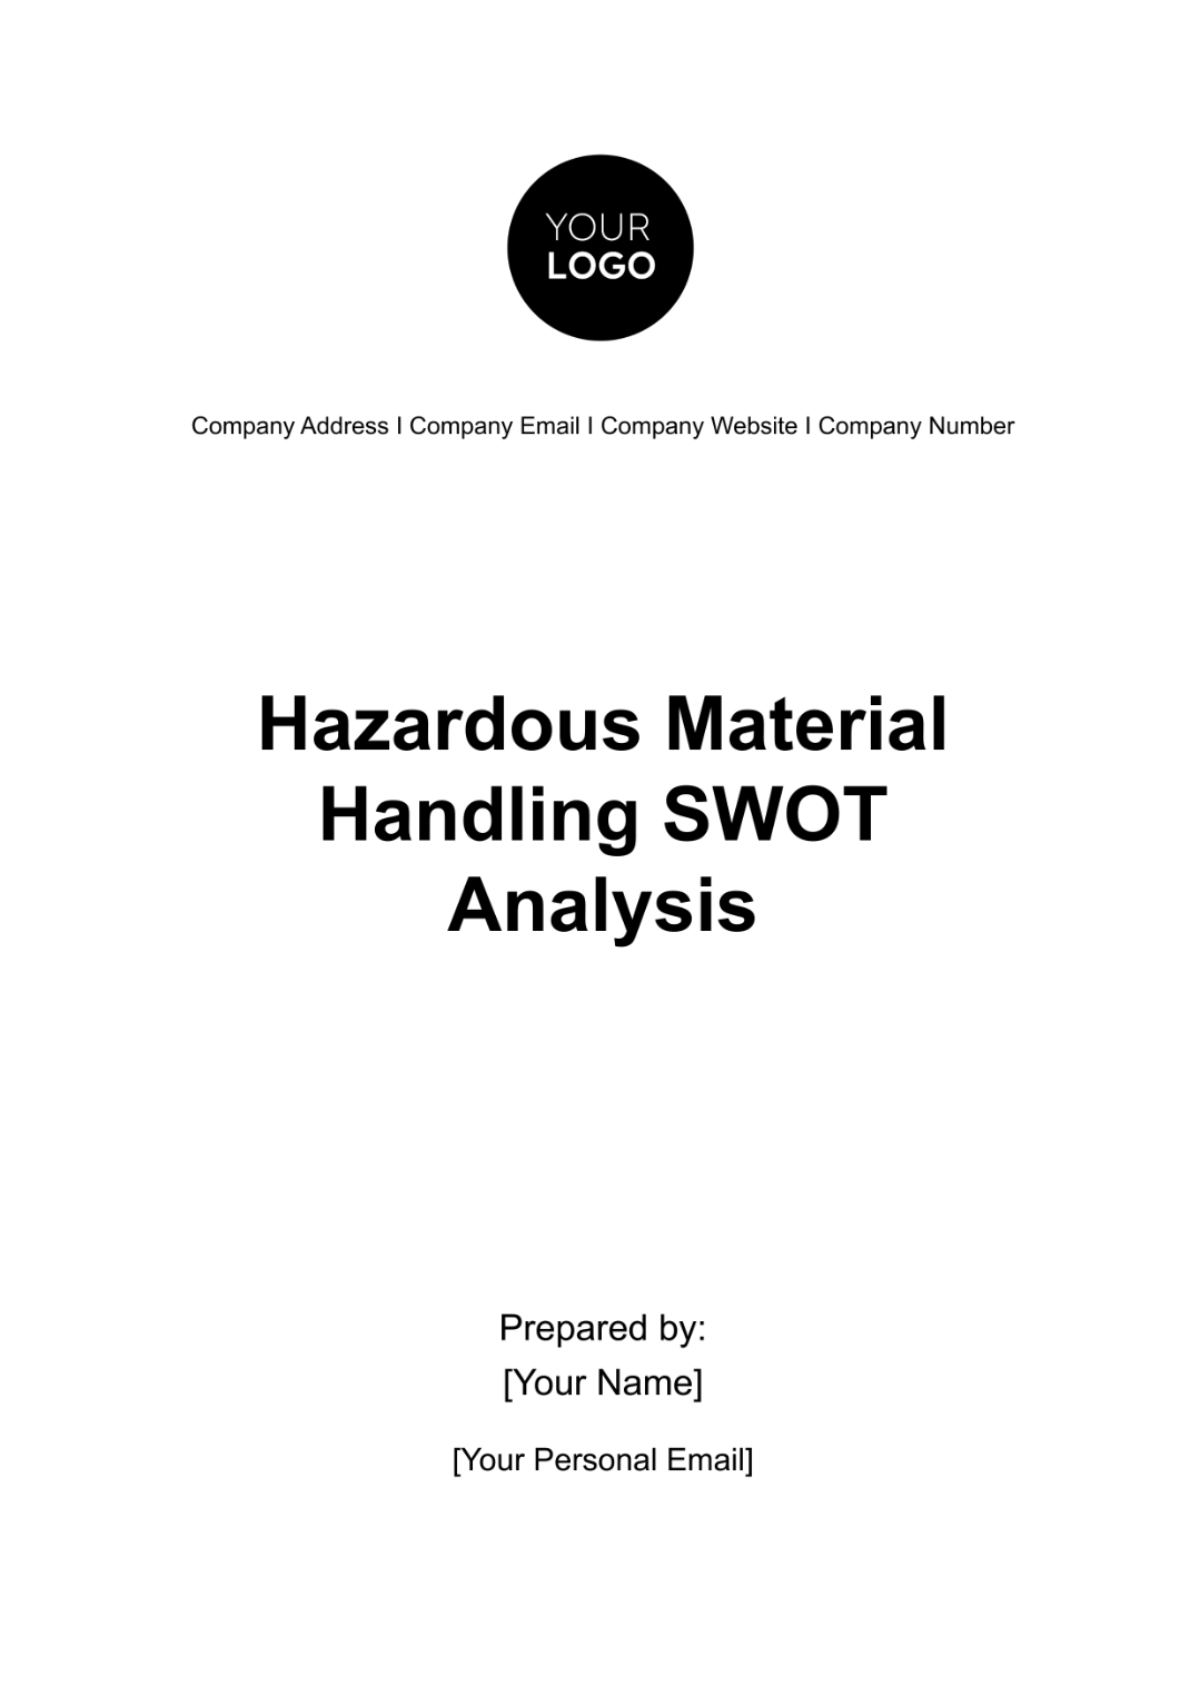 Free Hazardous Material Handling SWOT Analysis HR Template